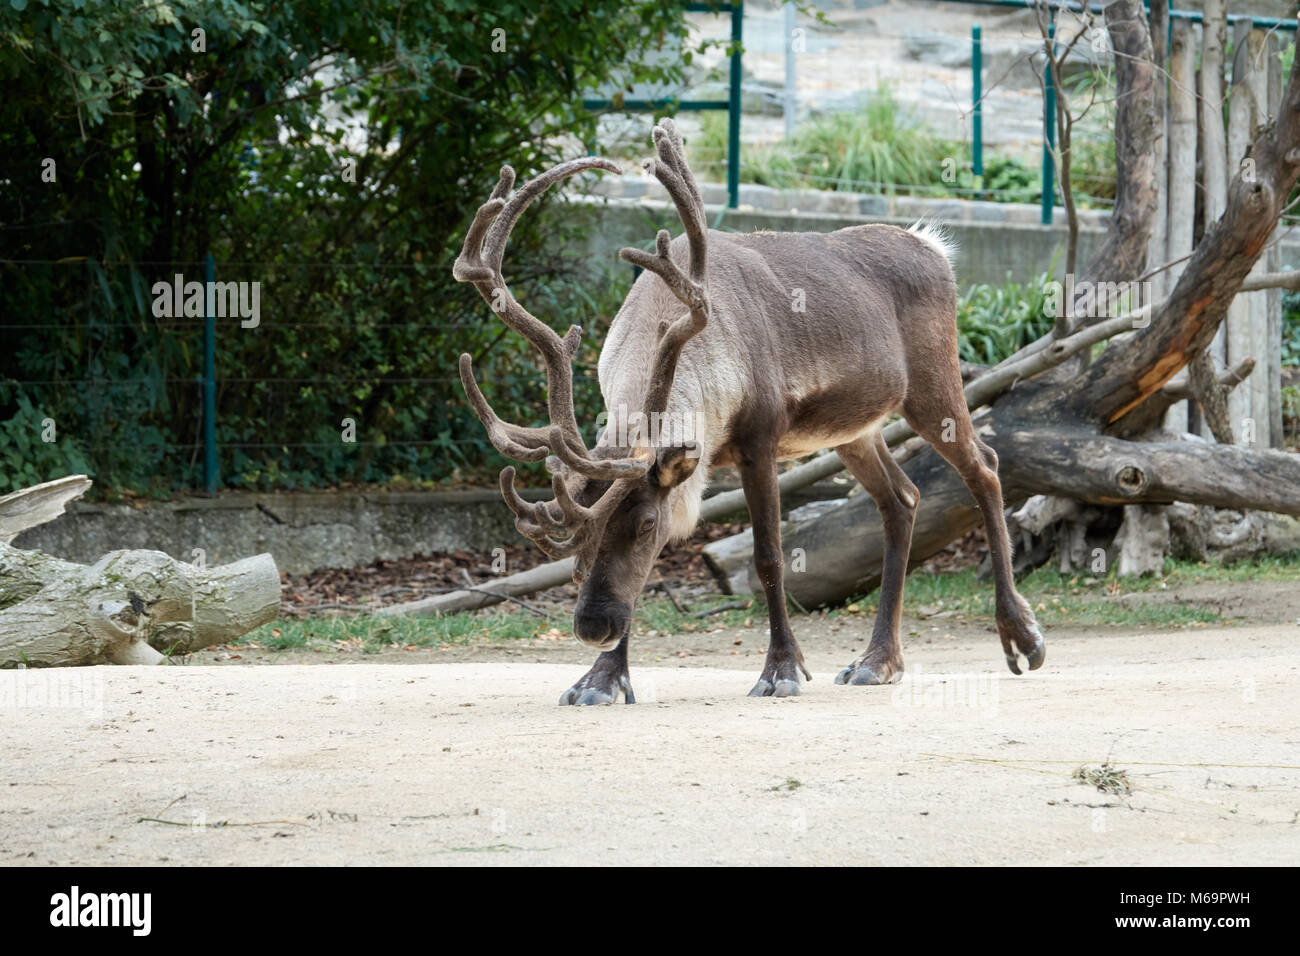 One reindeer with big horns walks in the zoo. Stock Photo